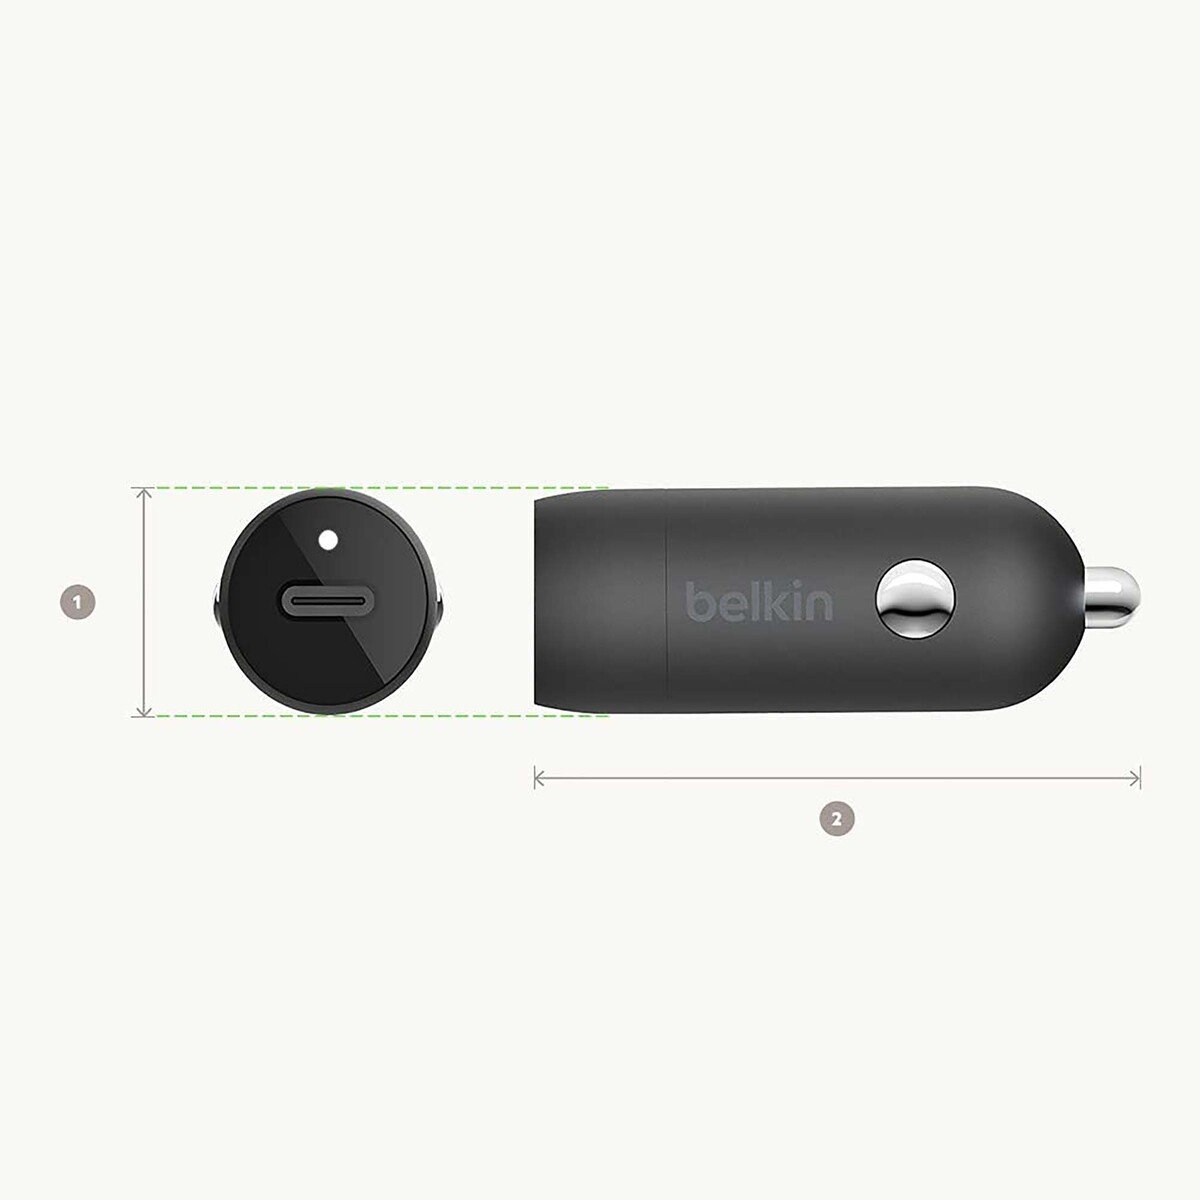 Belkin USB-C Fast Car Charger 20W-Black  (CCA003bt)